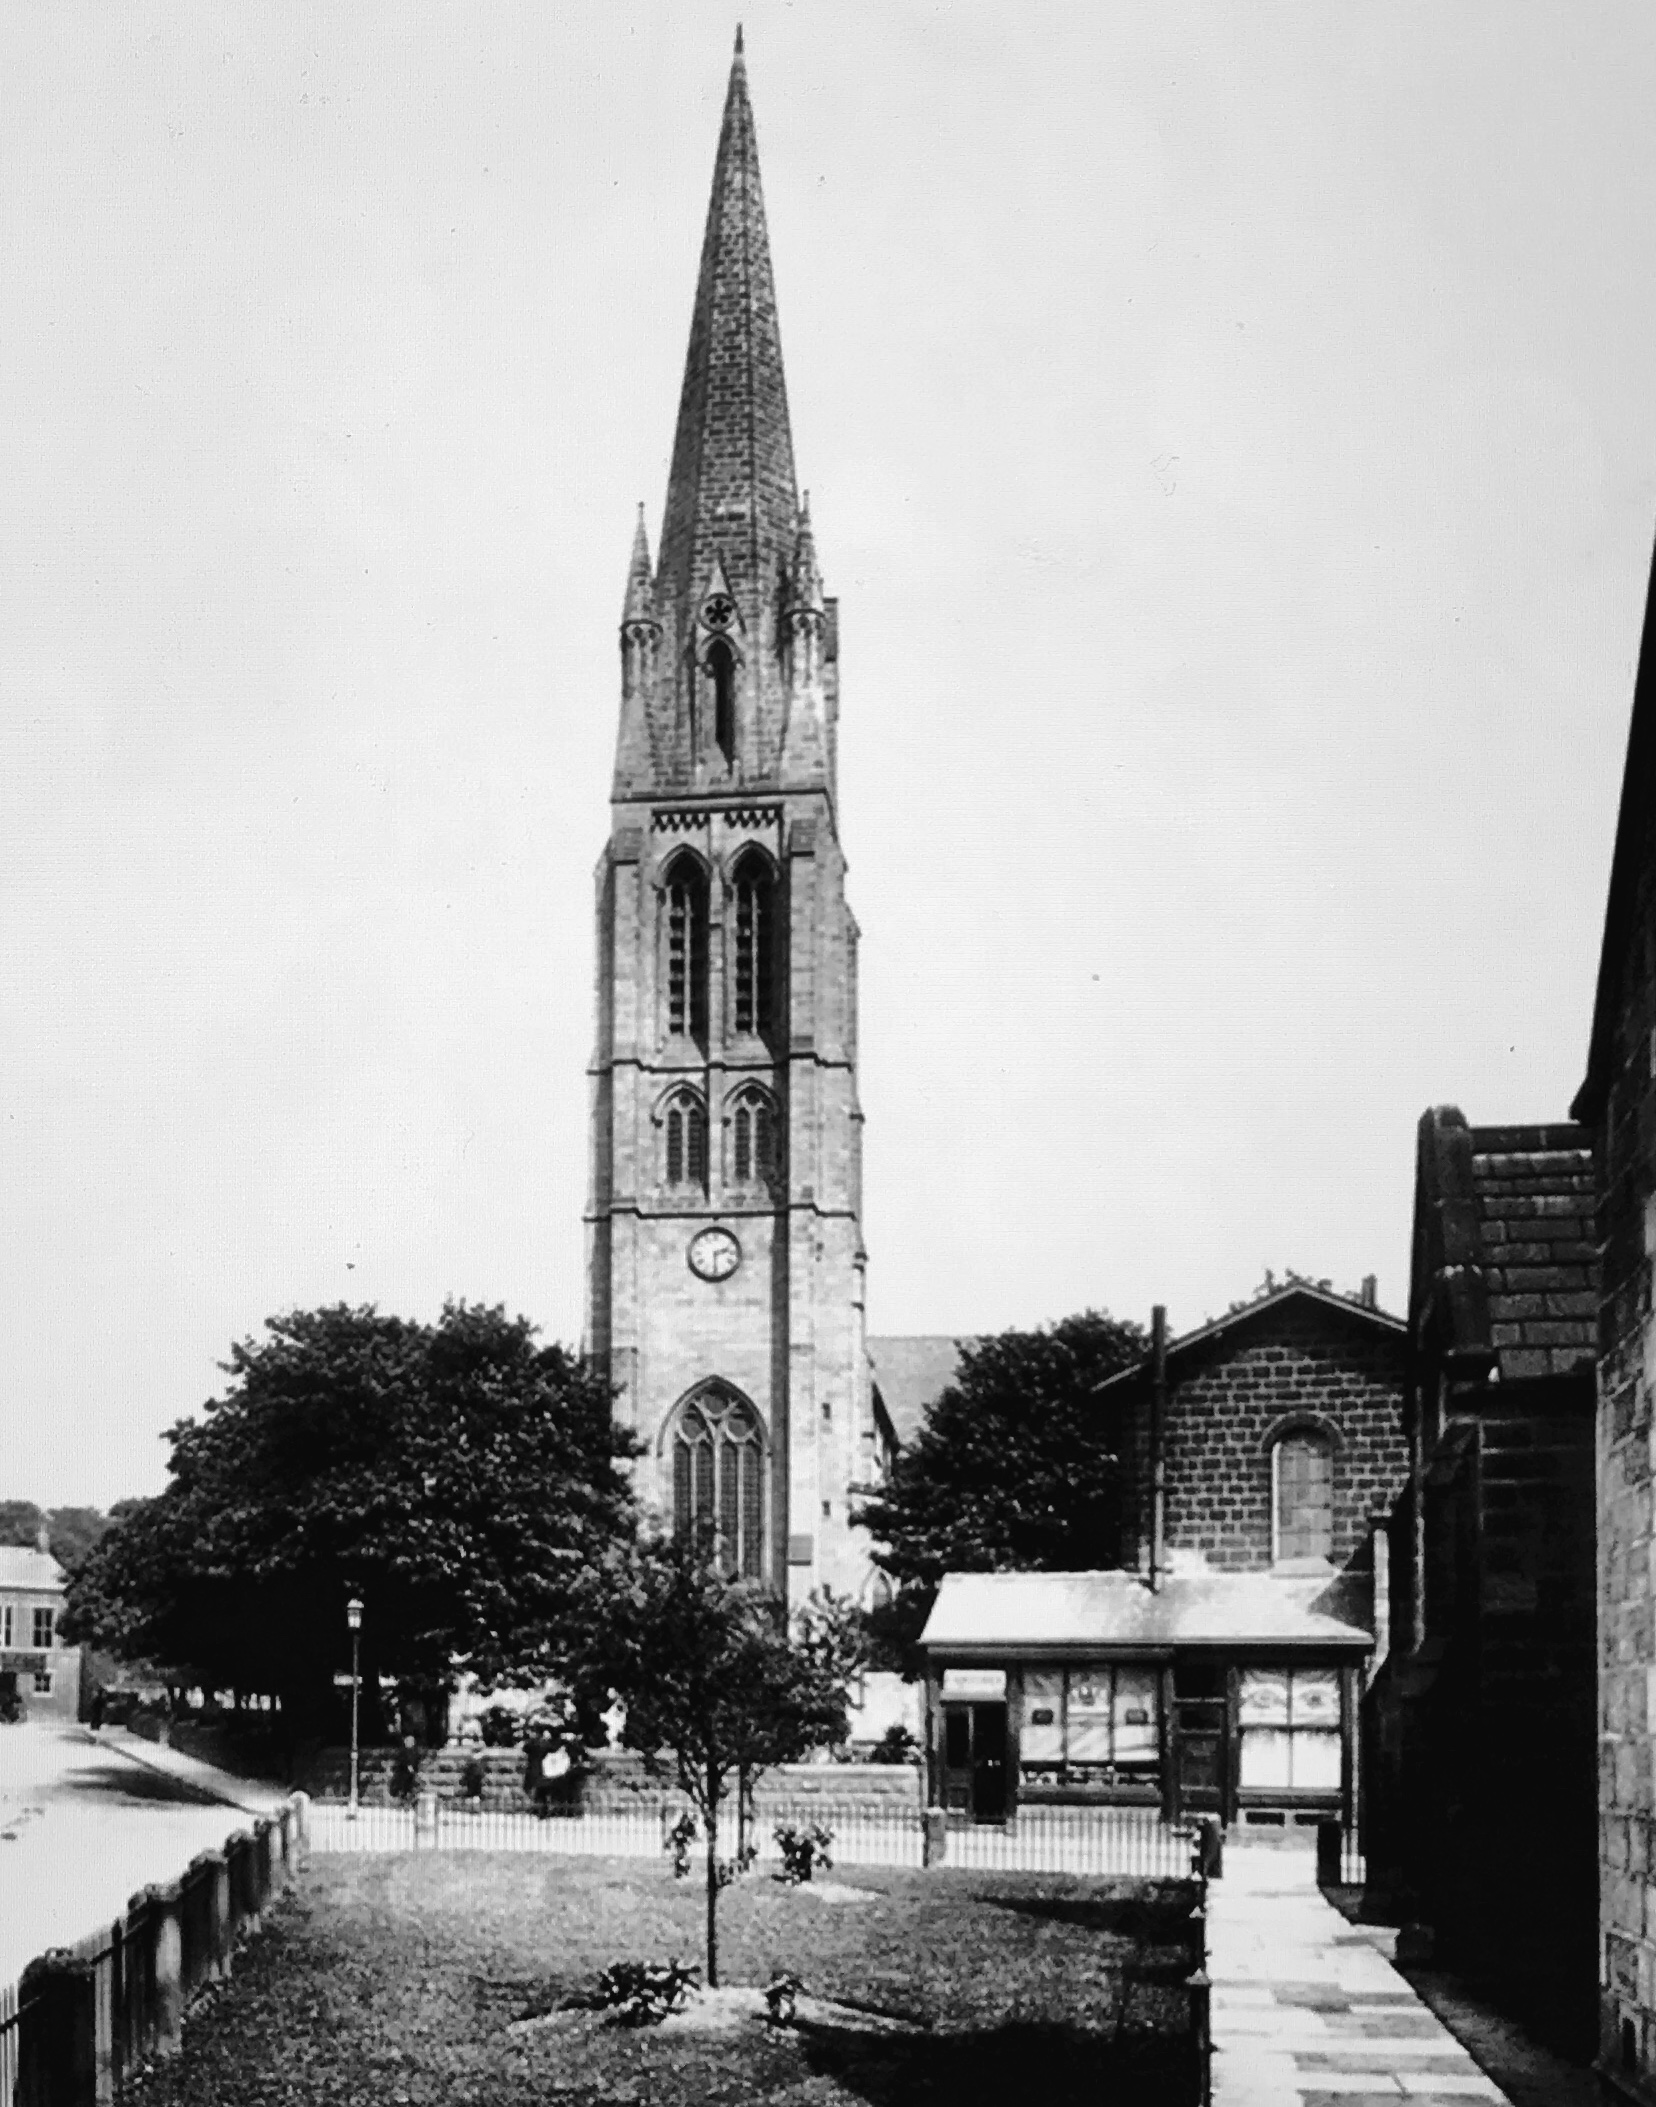 St Michael's Church and Village Green, circa 1897